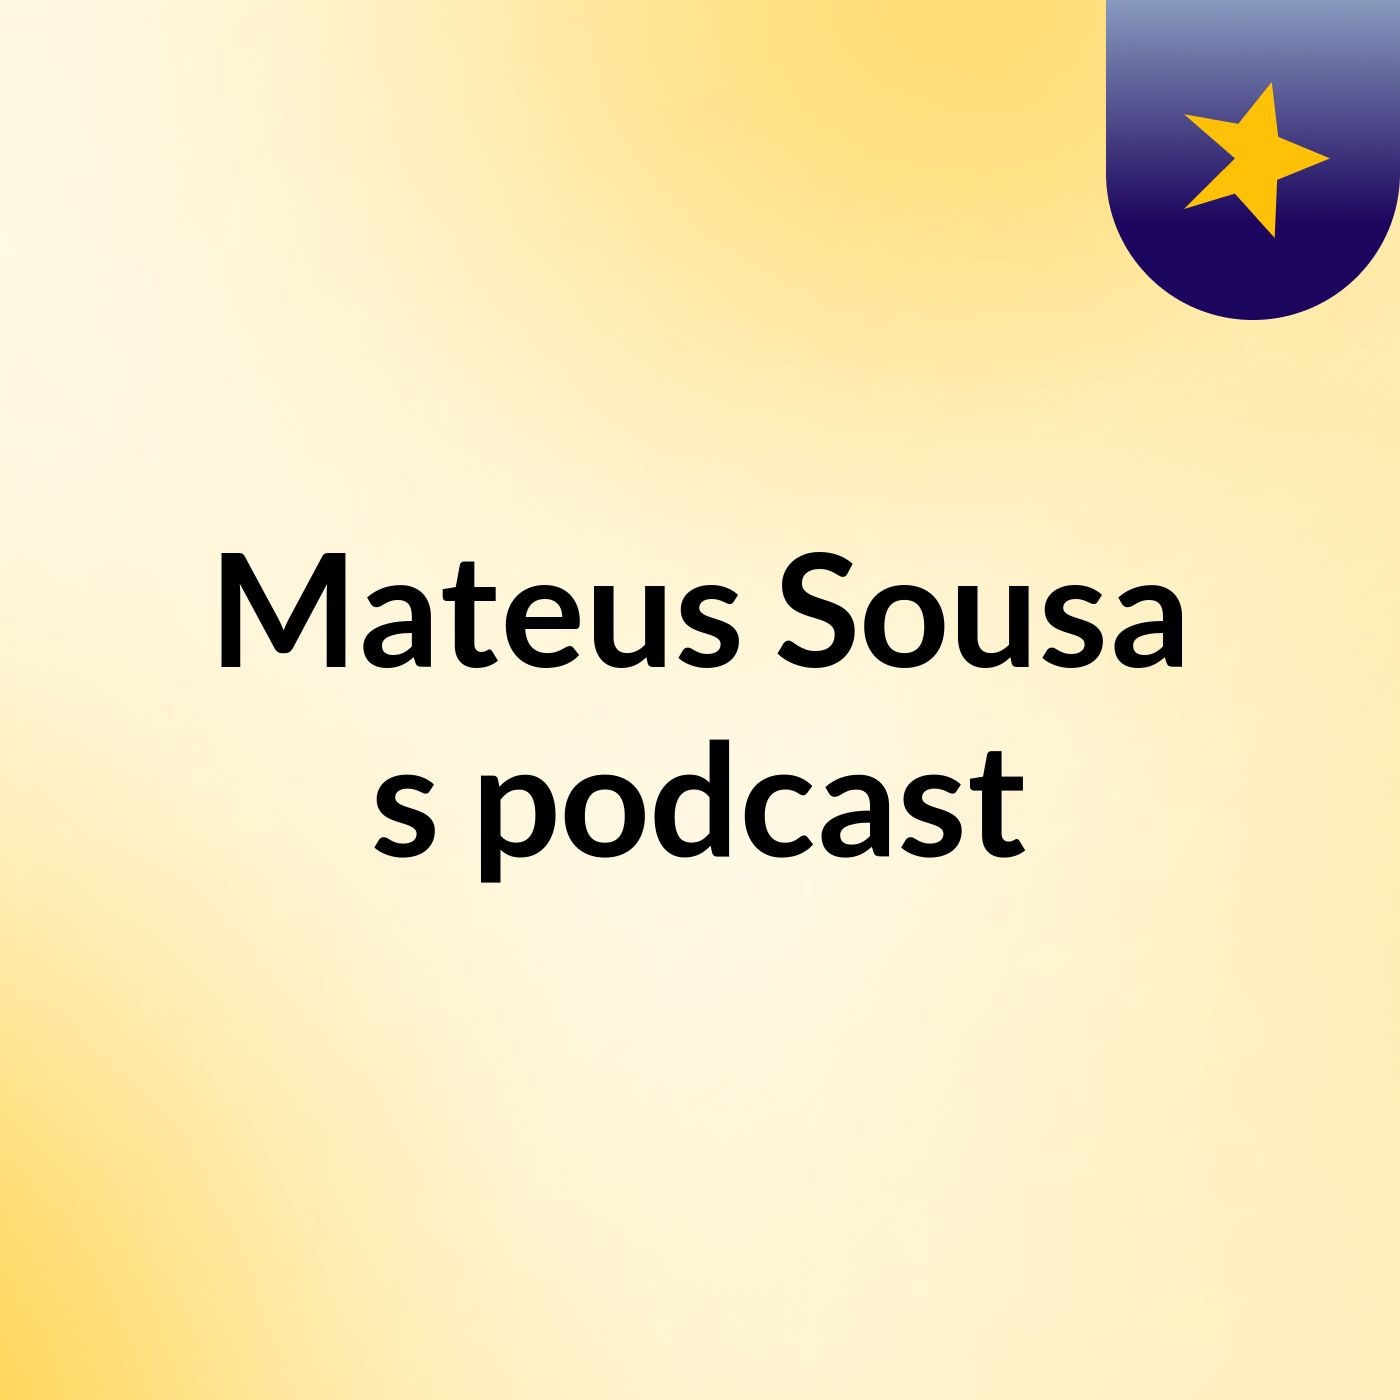 Mateus Sousa's podcast